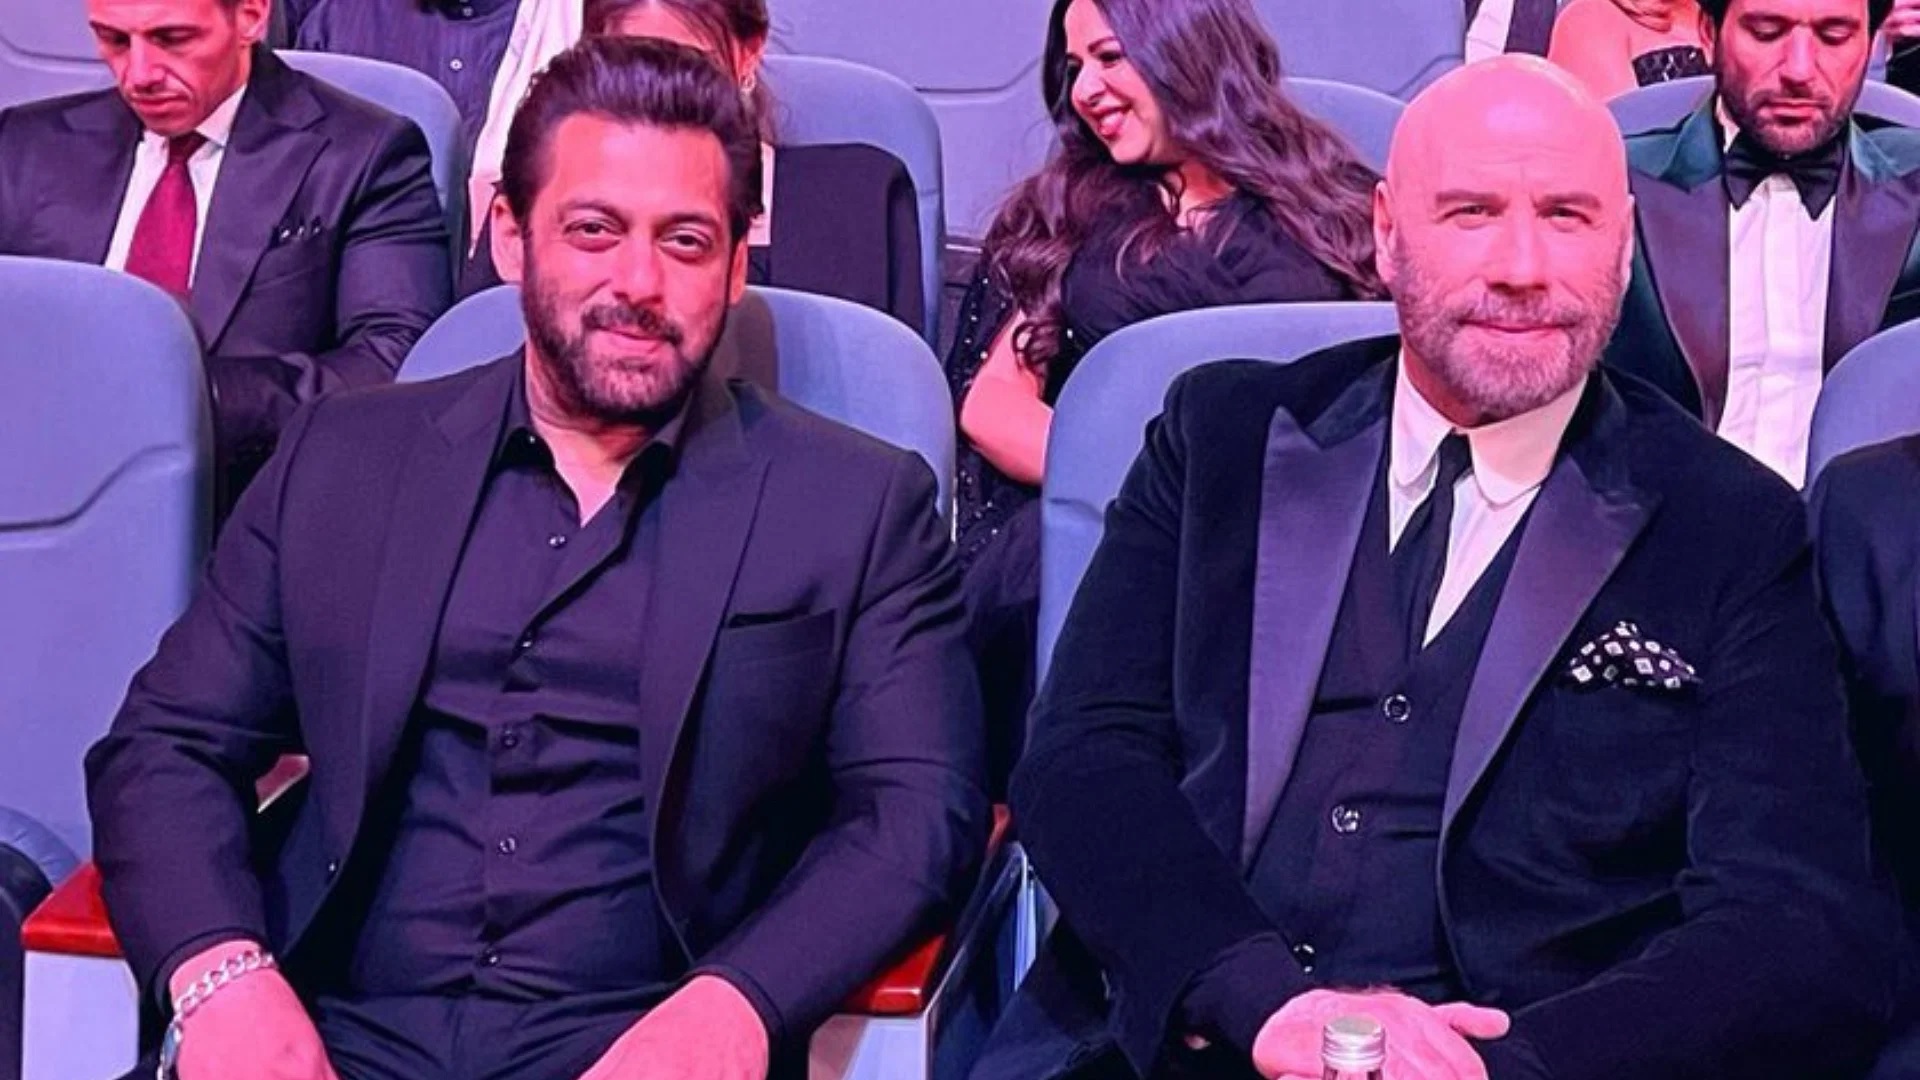 Salman Khan Meets Hollywood Star John Travolta In Riyadh, Humbly Introduces Himself, ‘My Name Is Salman Khan’